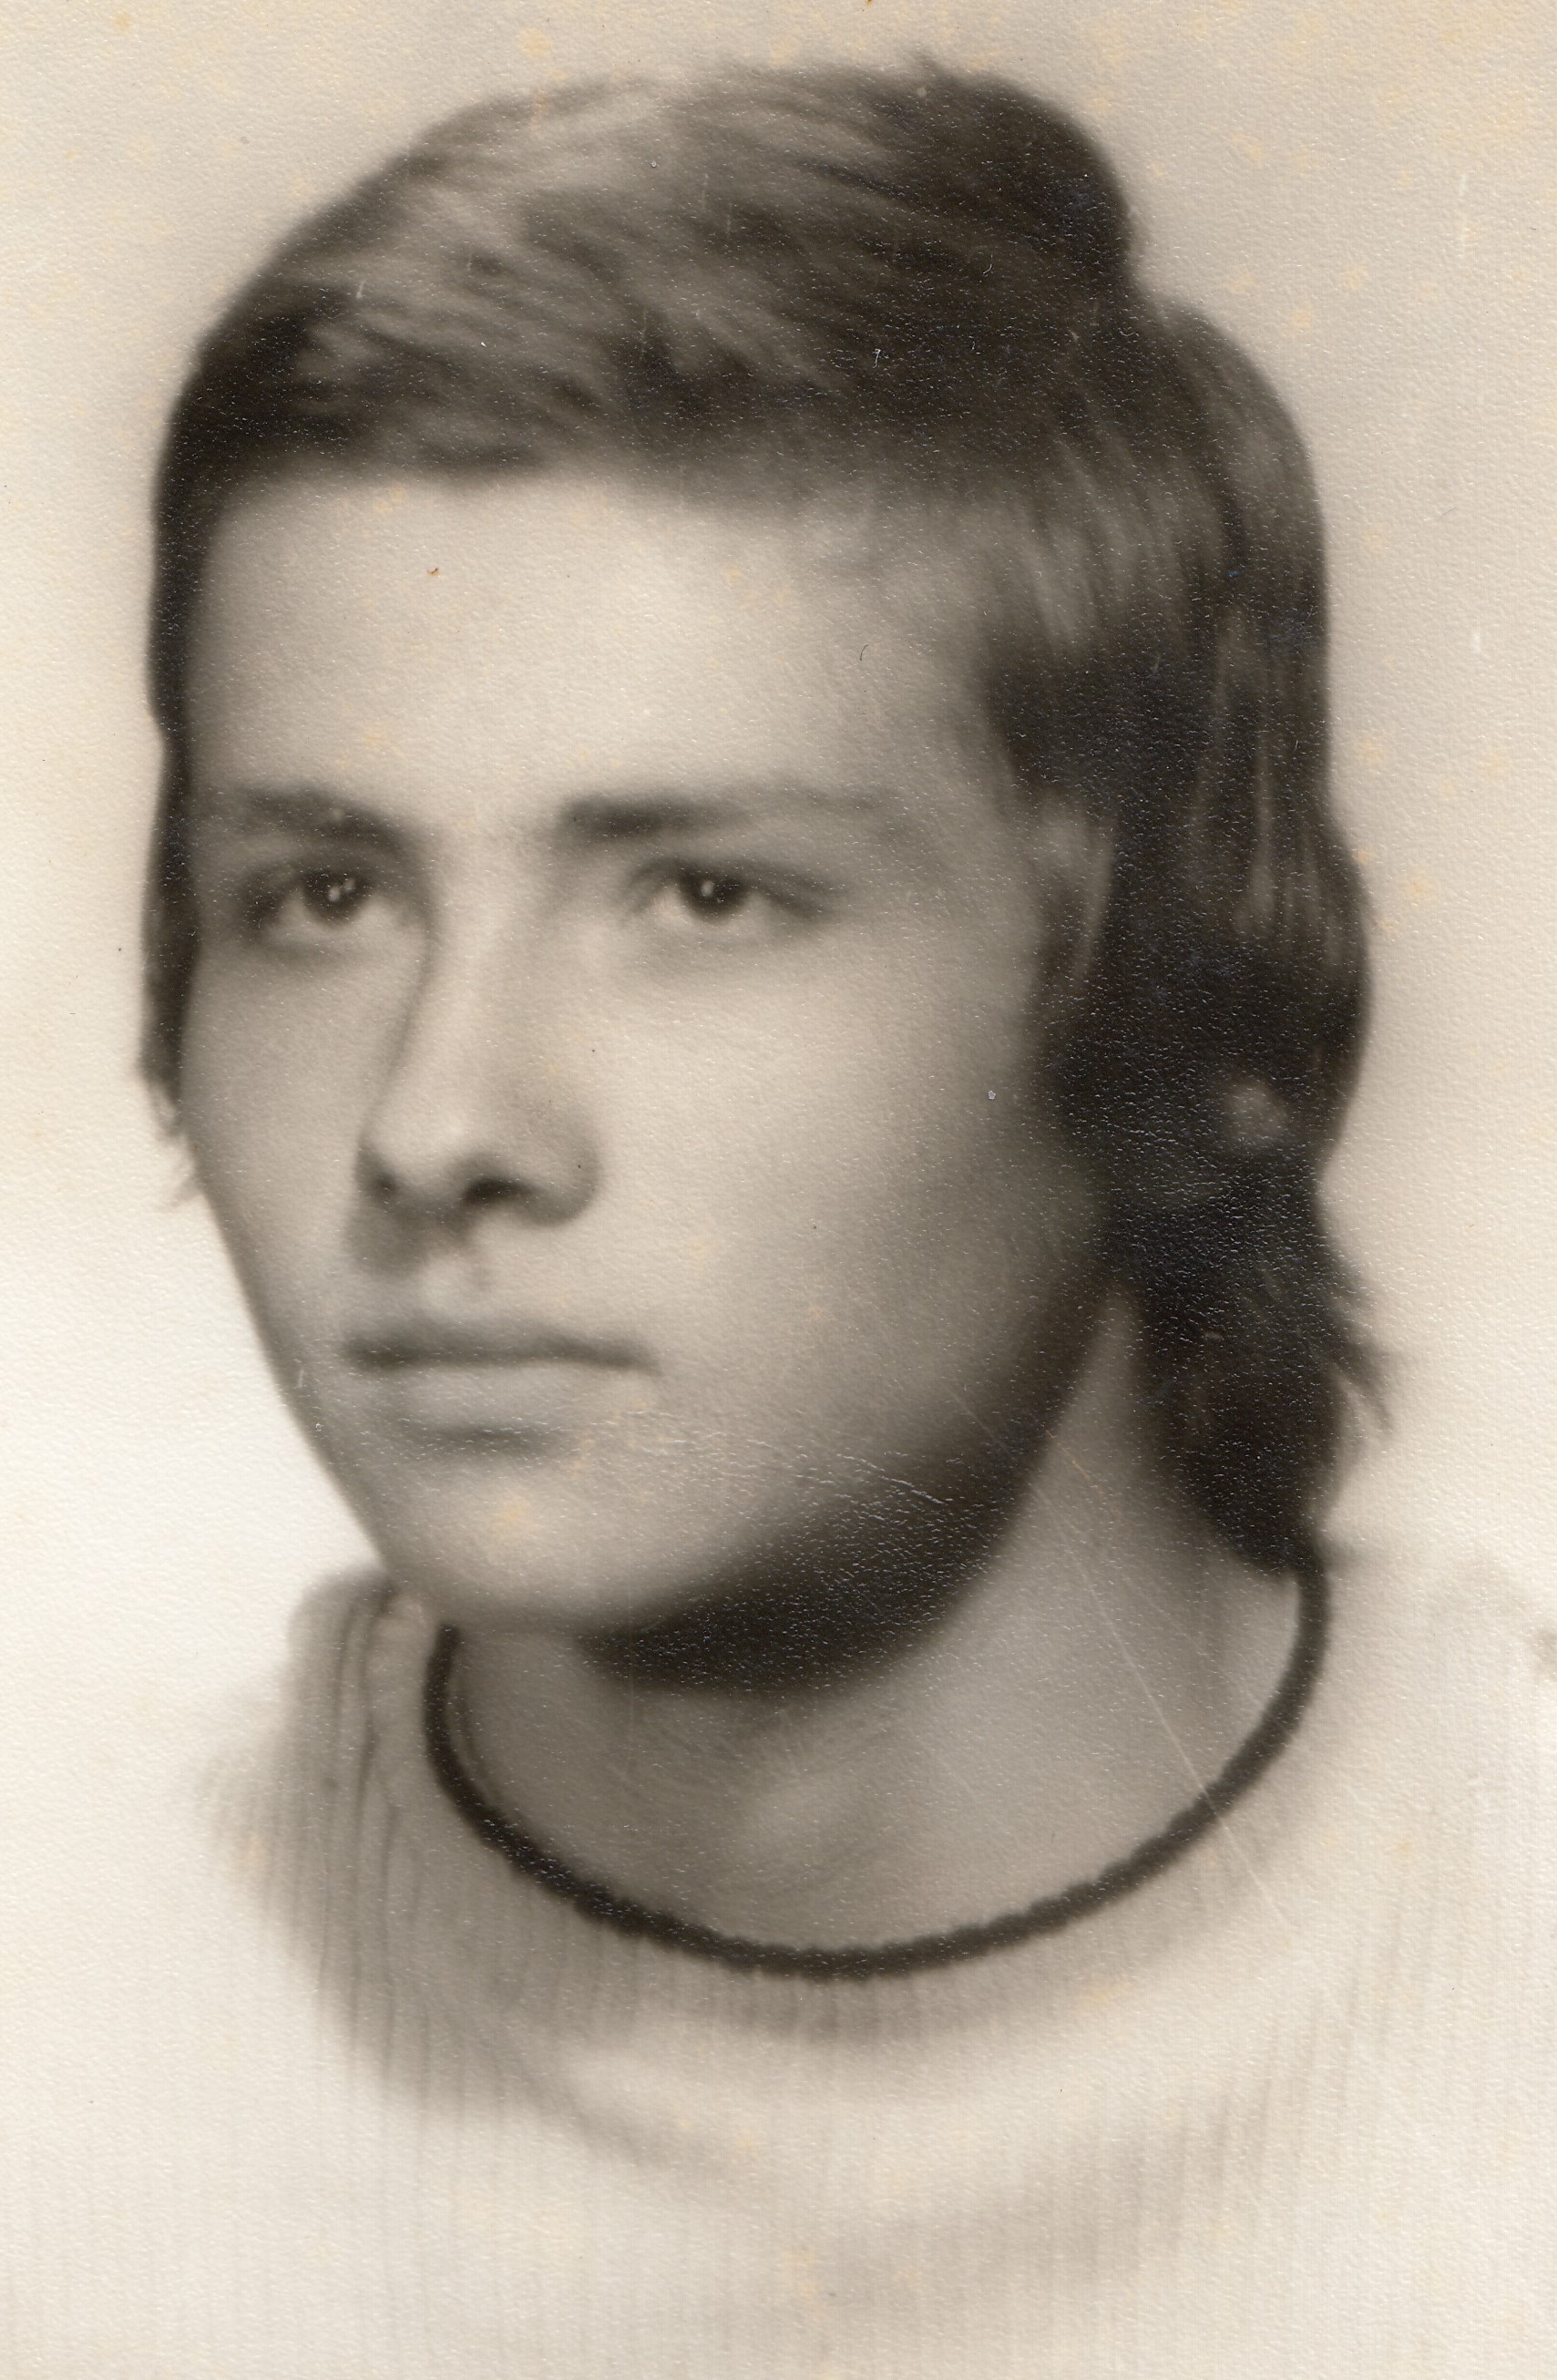 Otakar Klepárník in 1973